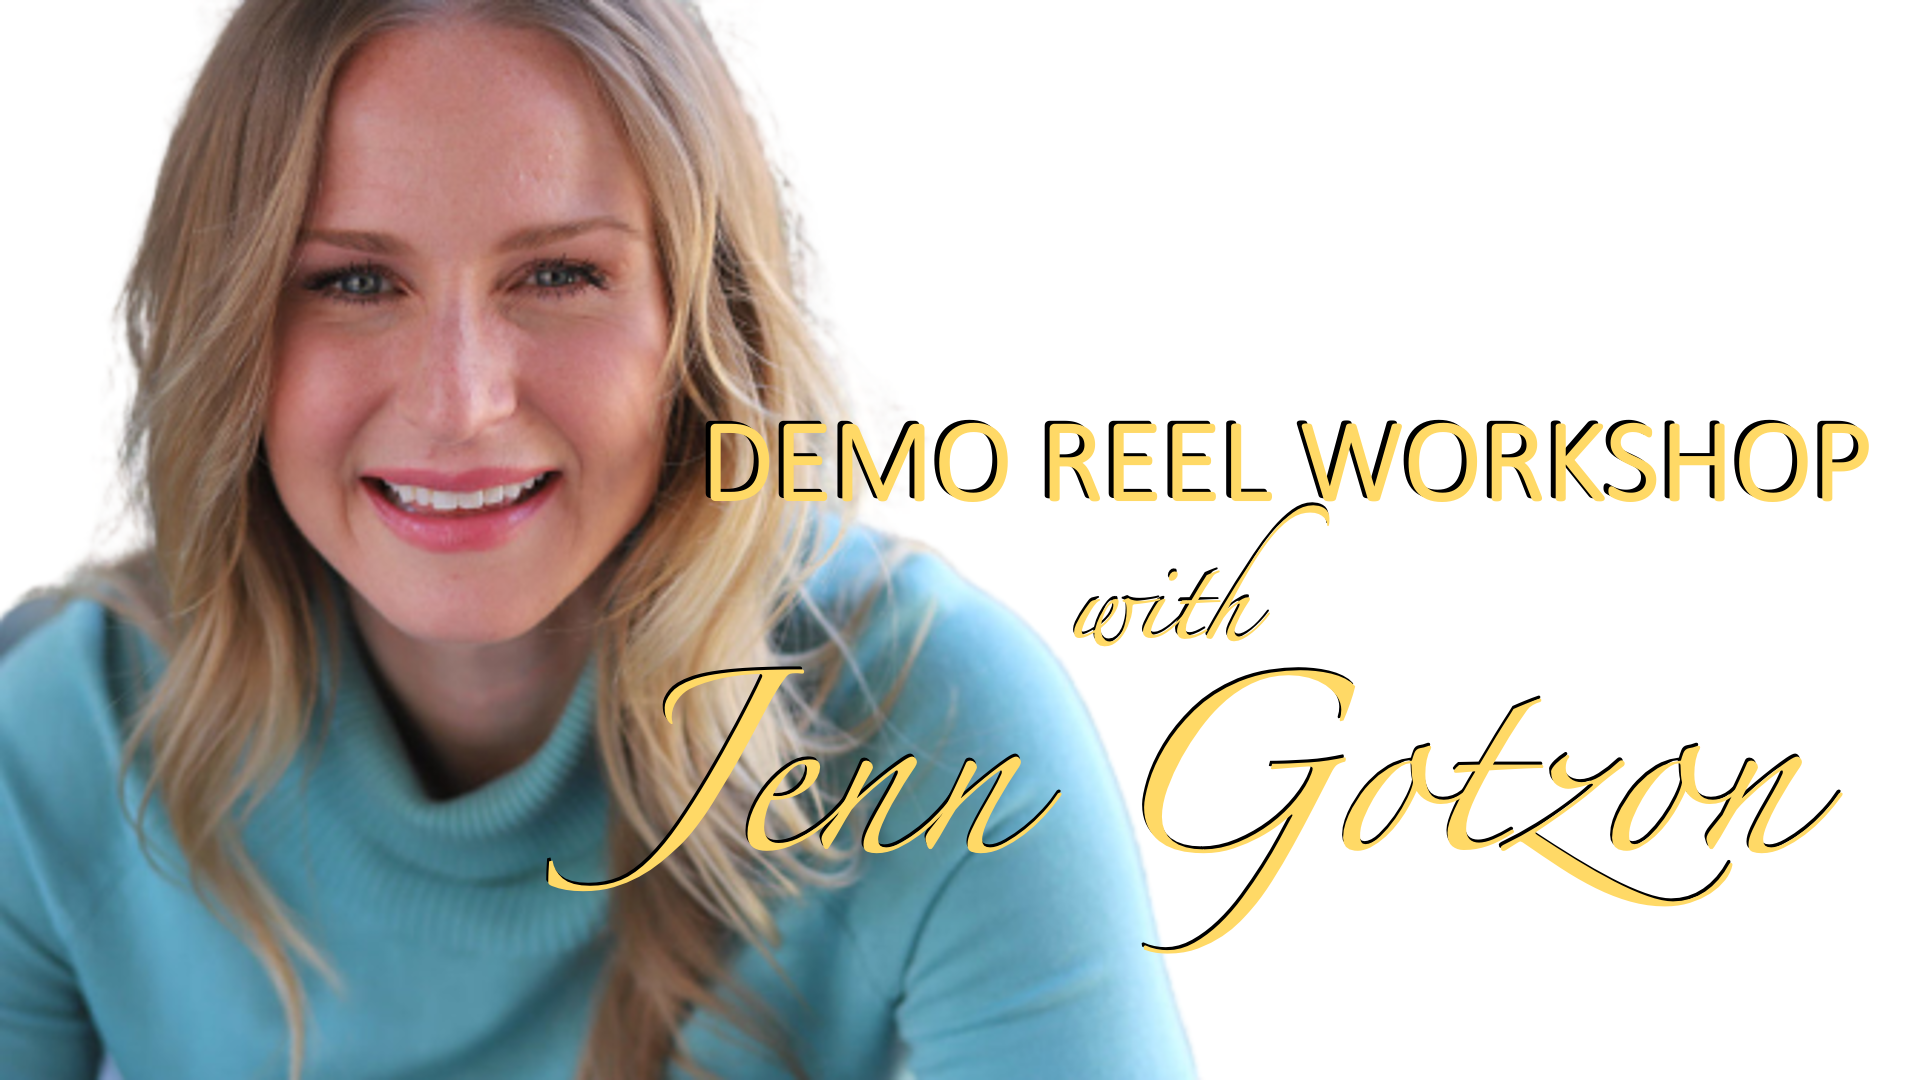 Demo Reel Workshop with Jenn Gotzon